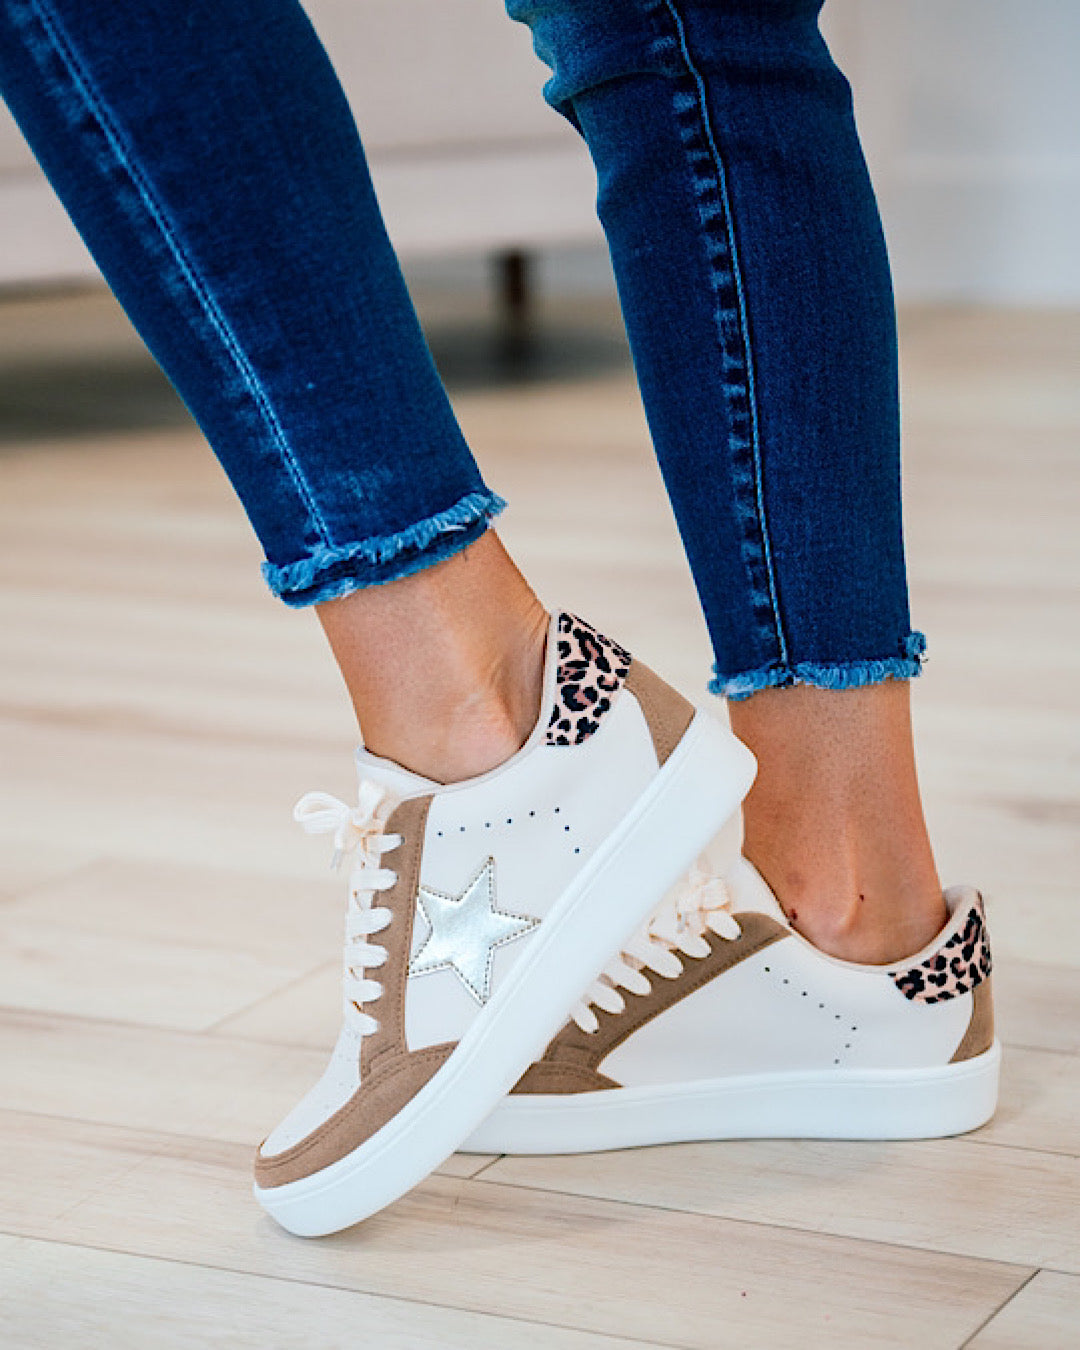 NEW! Miel Sneakers - Tan & Leopard  Makers   